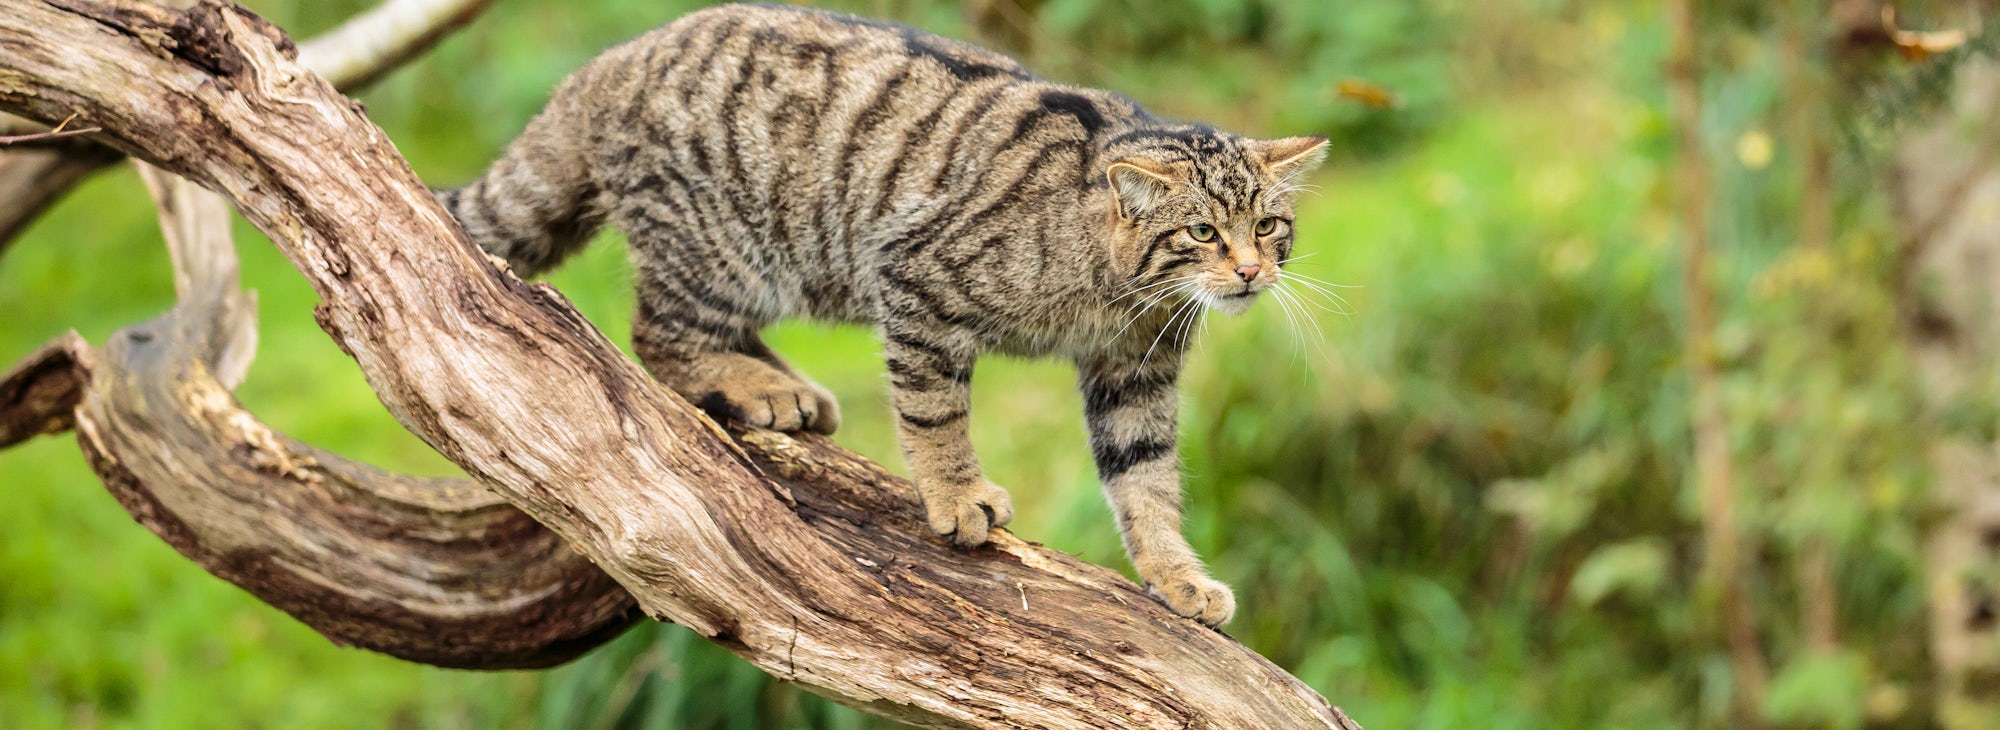 A Scottish Wildcat or Highlands tiger